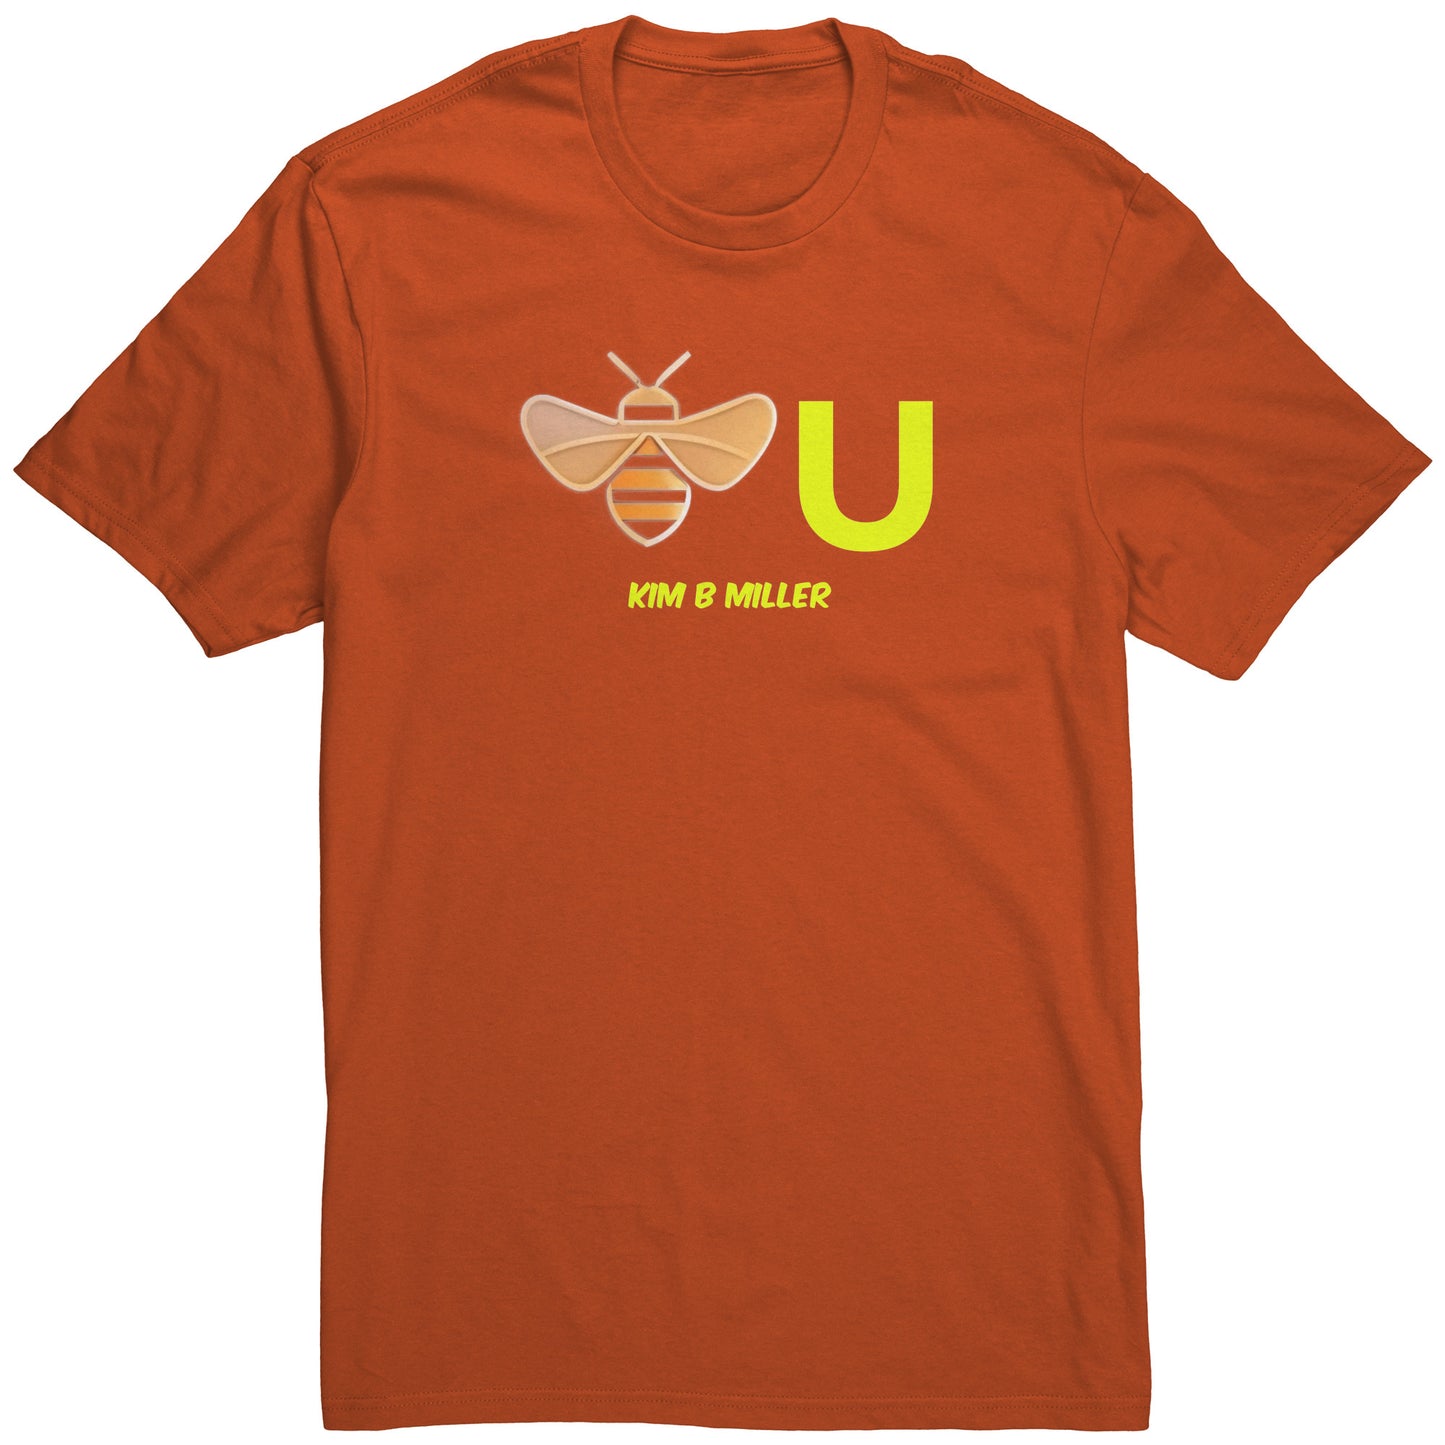 "Bee" You District Men's Shirt B